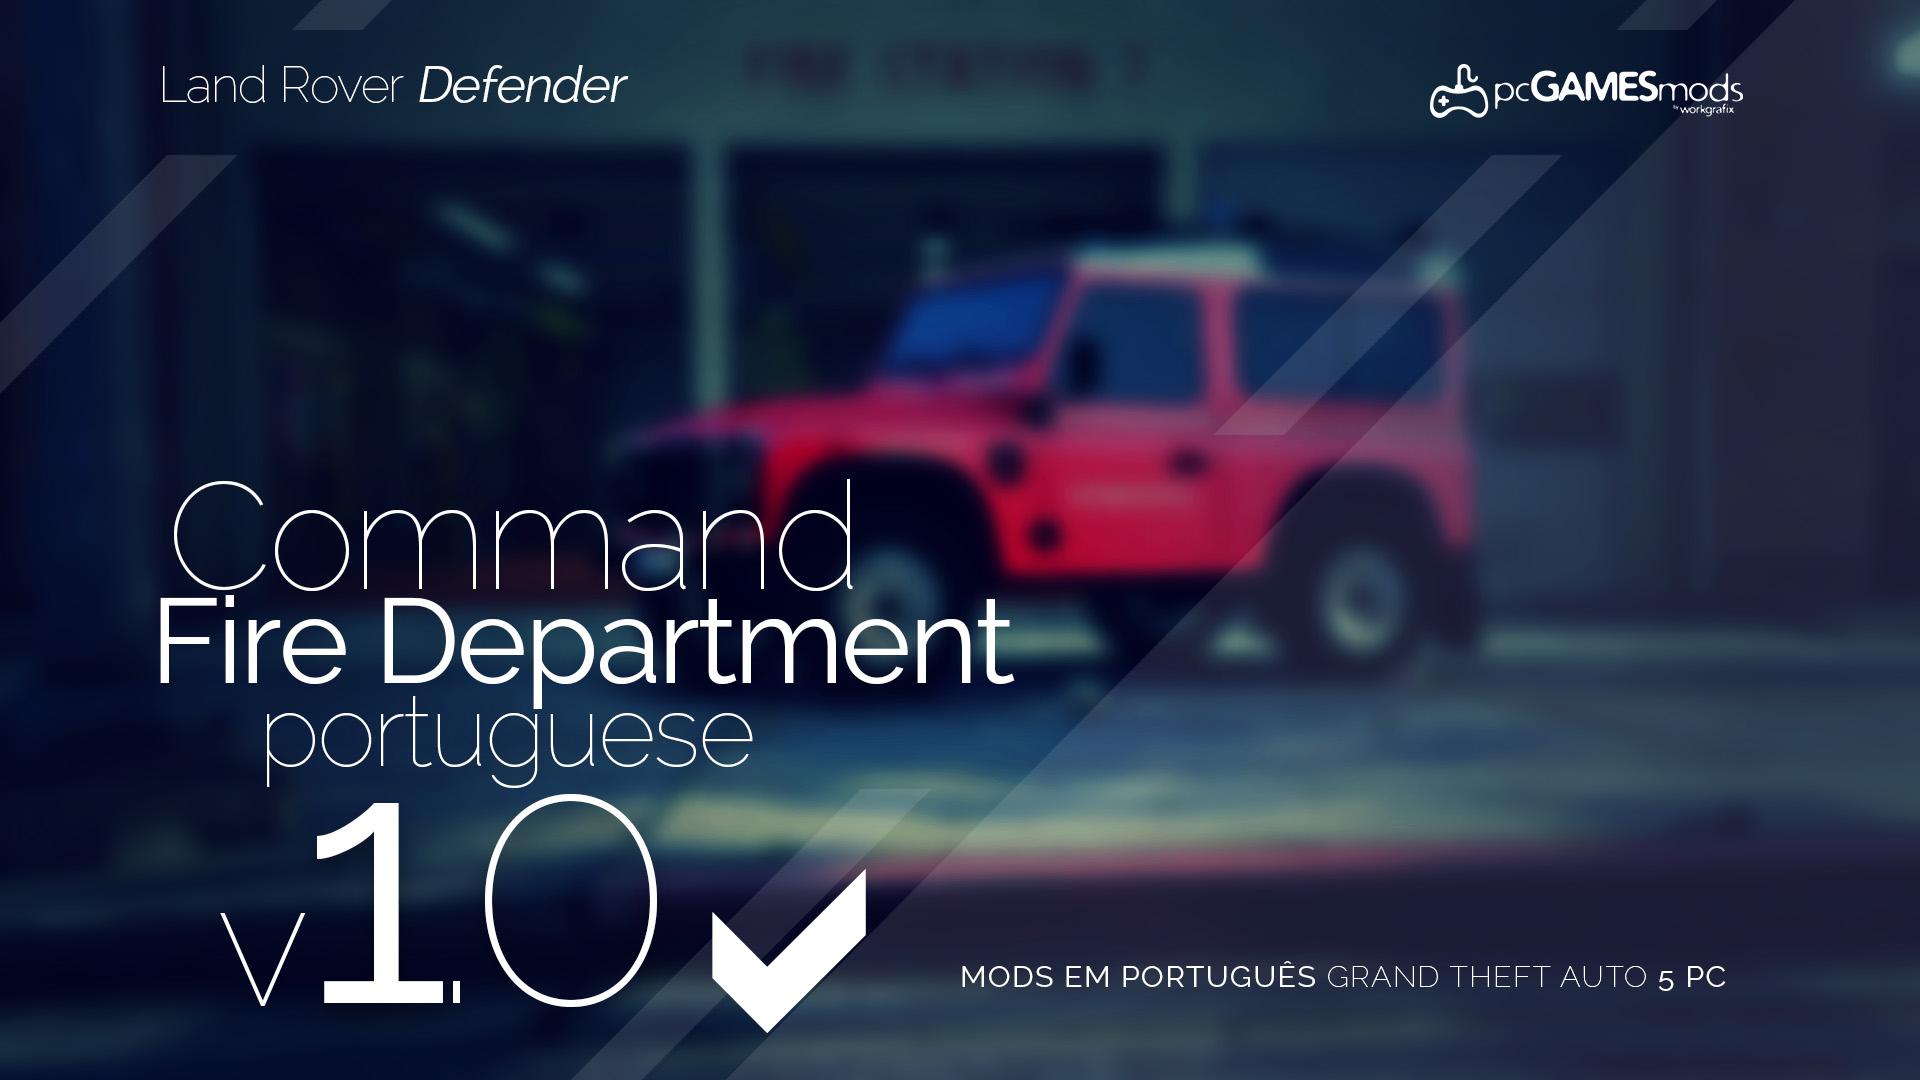 Portuguese Fire Department - Command - Land Rover Defender